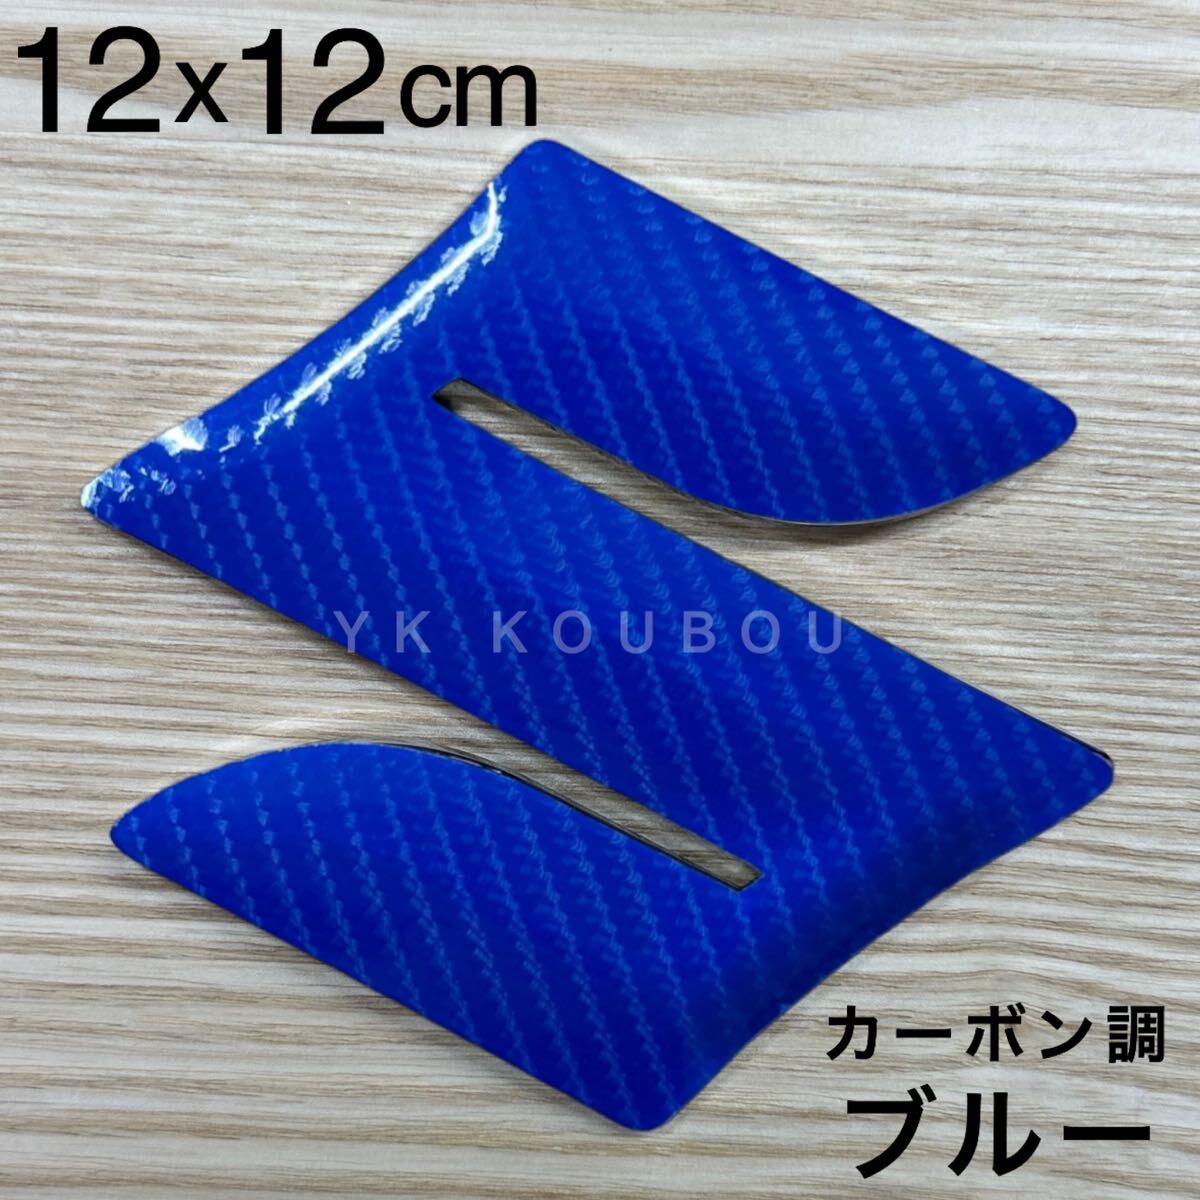 233 12cm| Suzuki | emblem sticker | carbon | blue | Spacia * custom * gear * Wagon R* stingray * Solio 